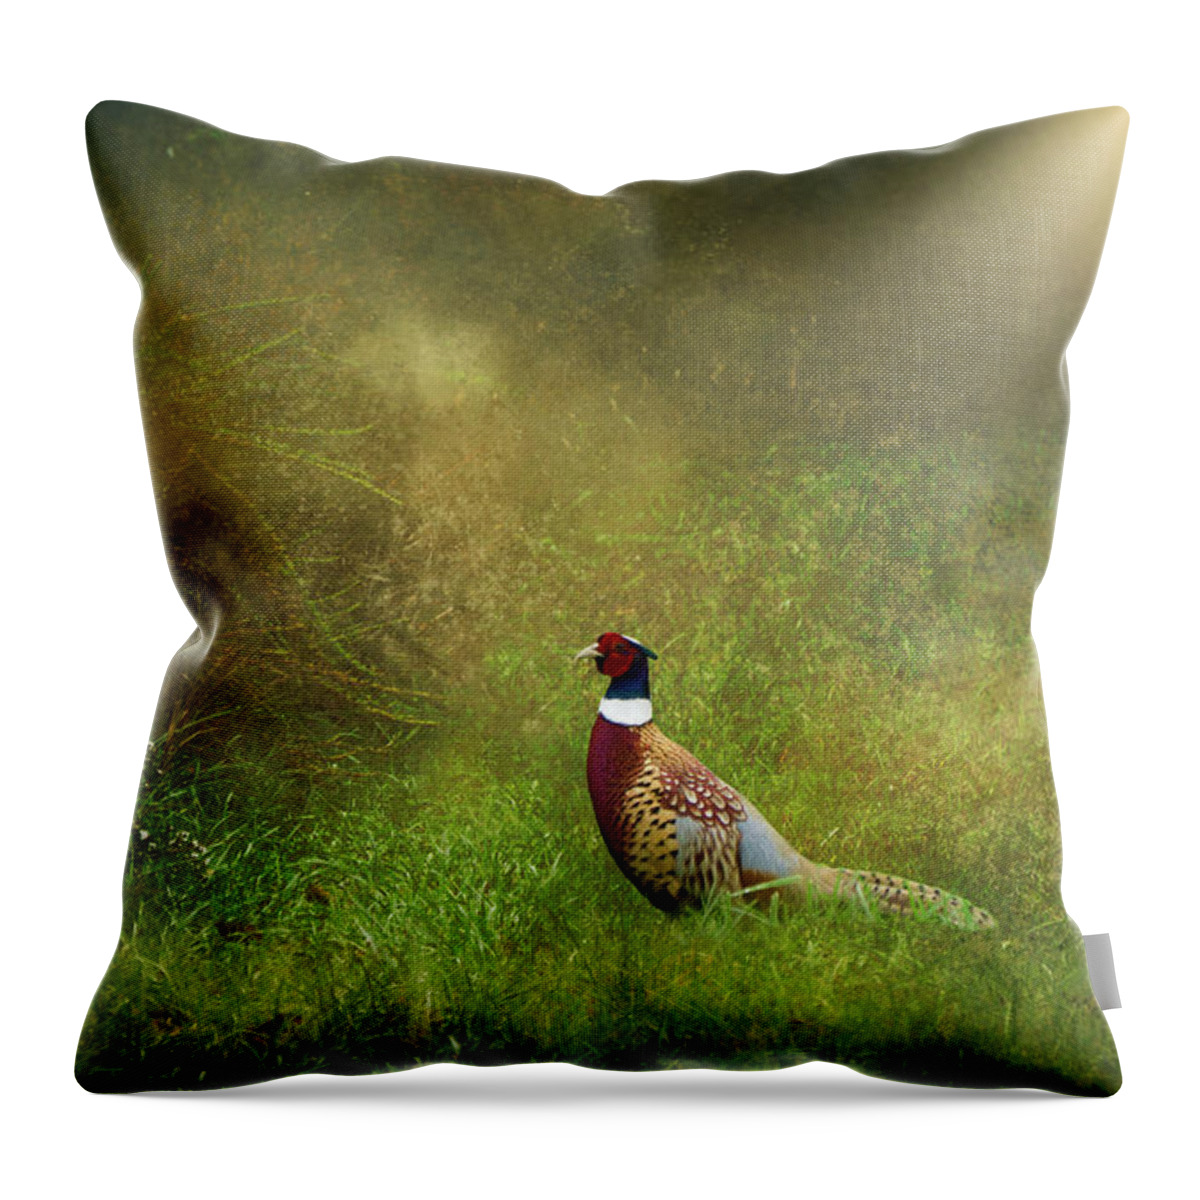 Pheasant Throw Pillow featuring the photograph Pheasant by Randall Allen